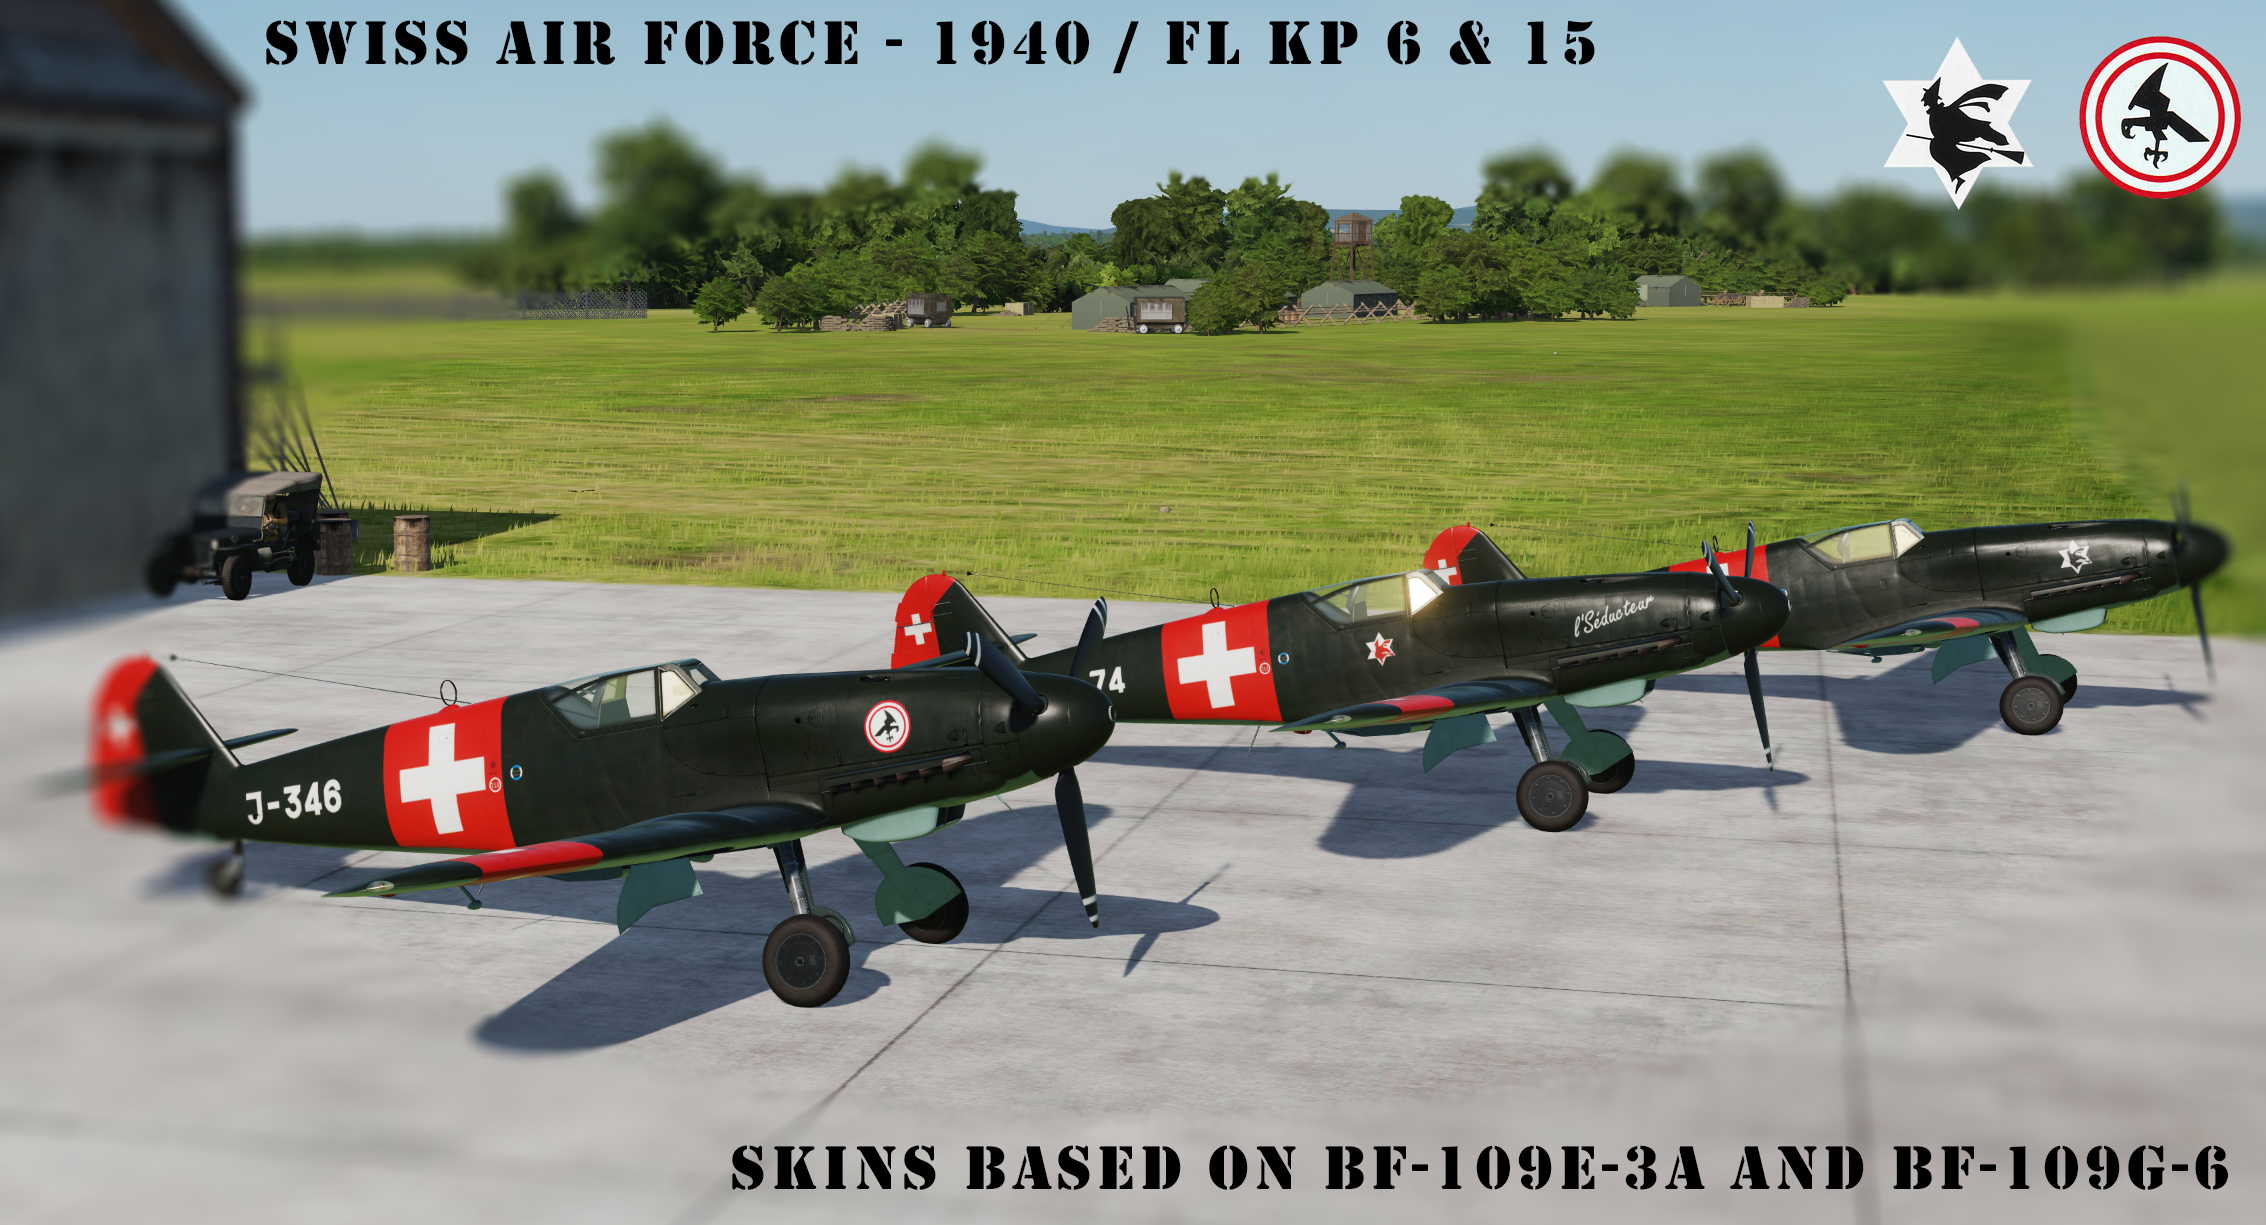 [Bf-109K-4] Swiss Air Force 1940 - Fl Kp 6 & 15